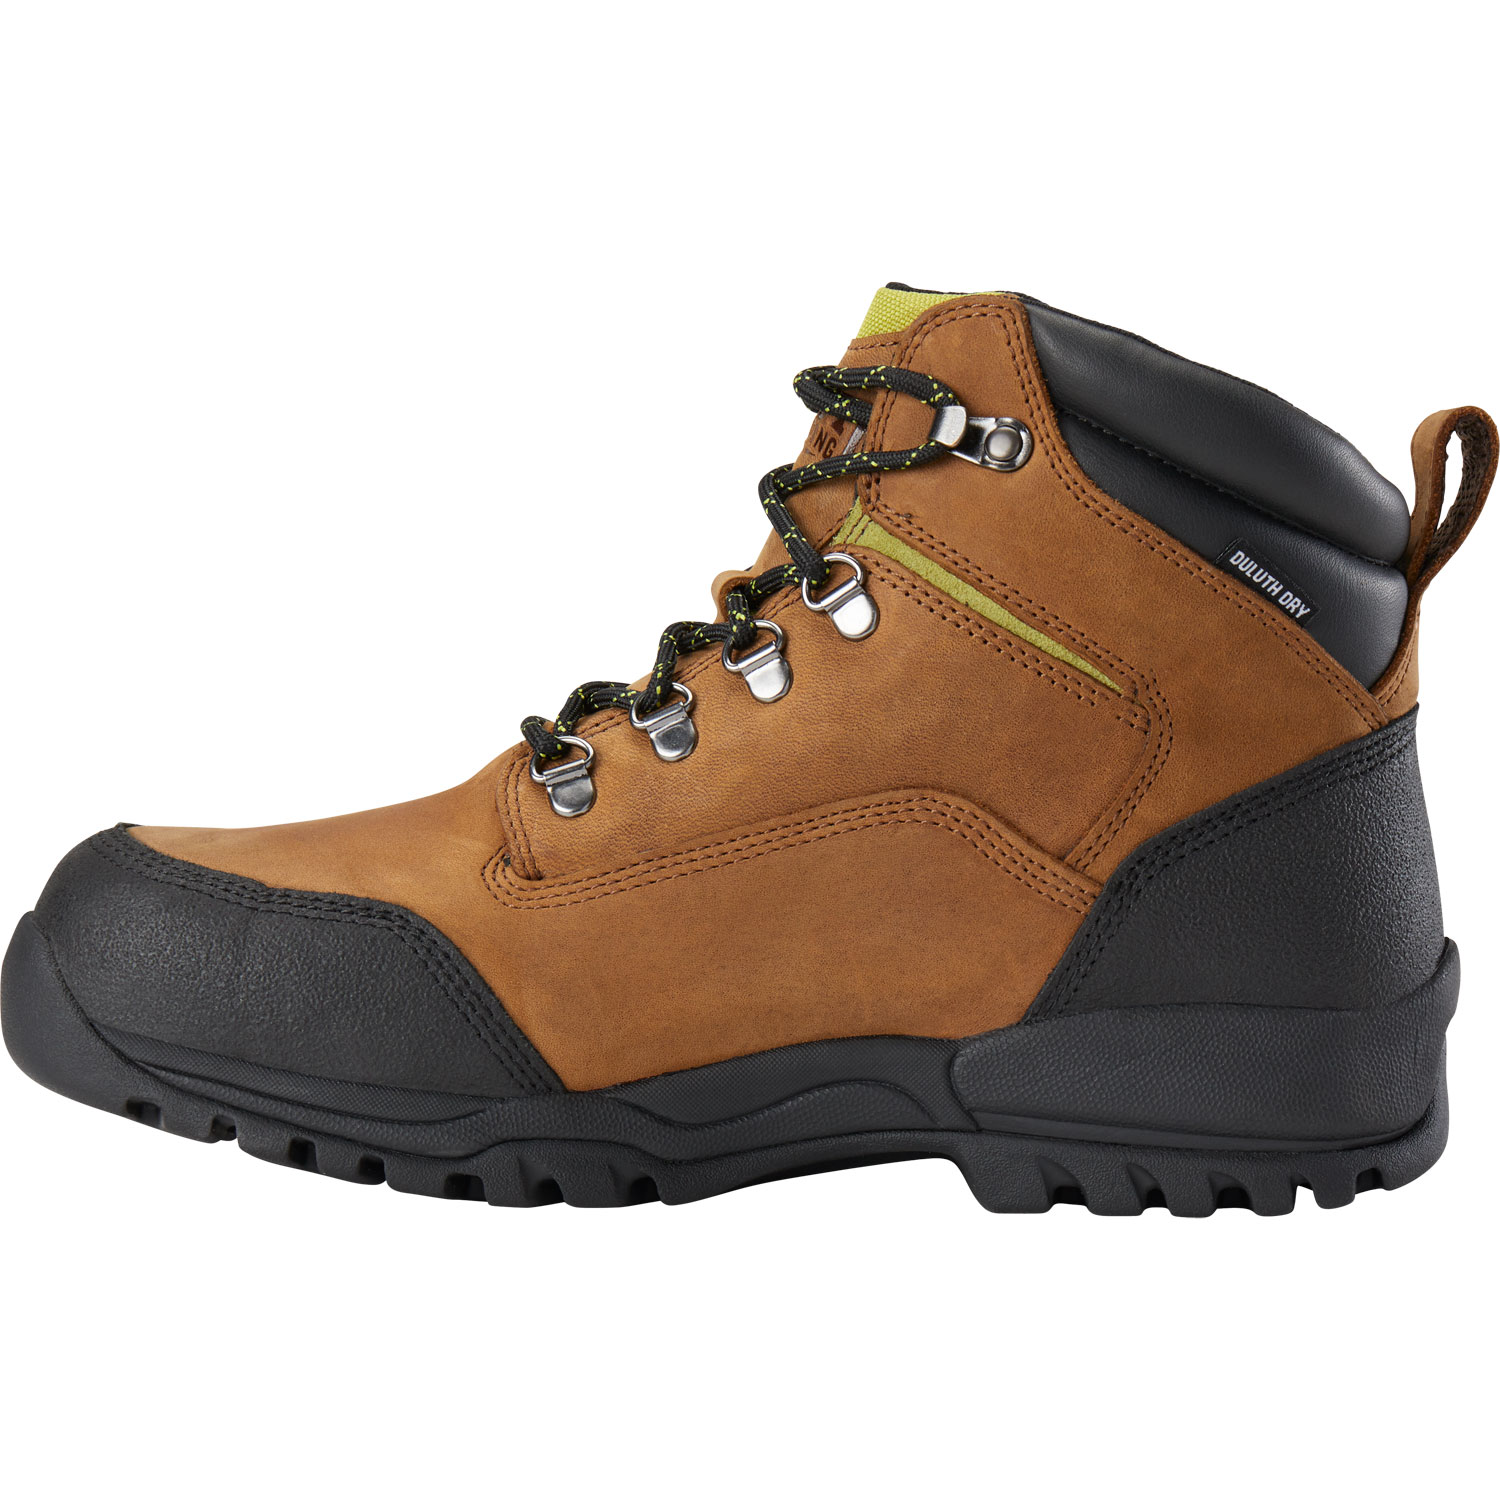 Men's Grindstone 2.0 6" Soft Toe Work Boots